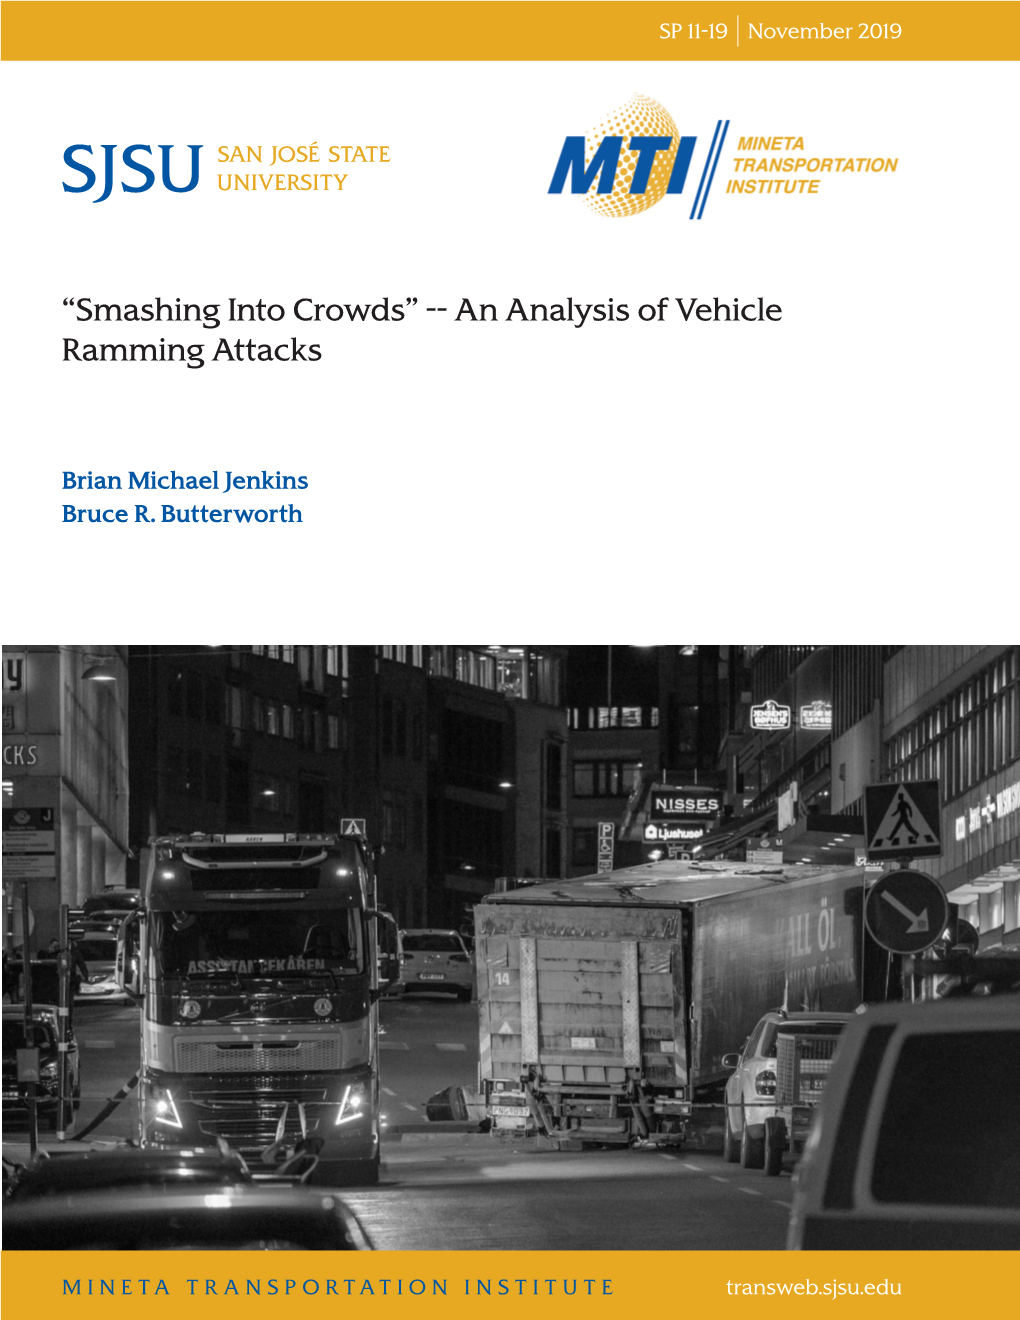 “Smashing Into Crowds” -- an Analysis of Vehicle Ramming Attacks